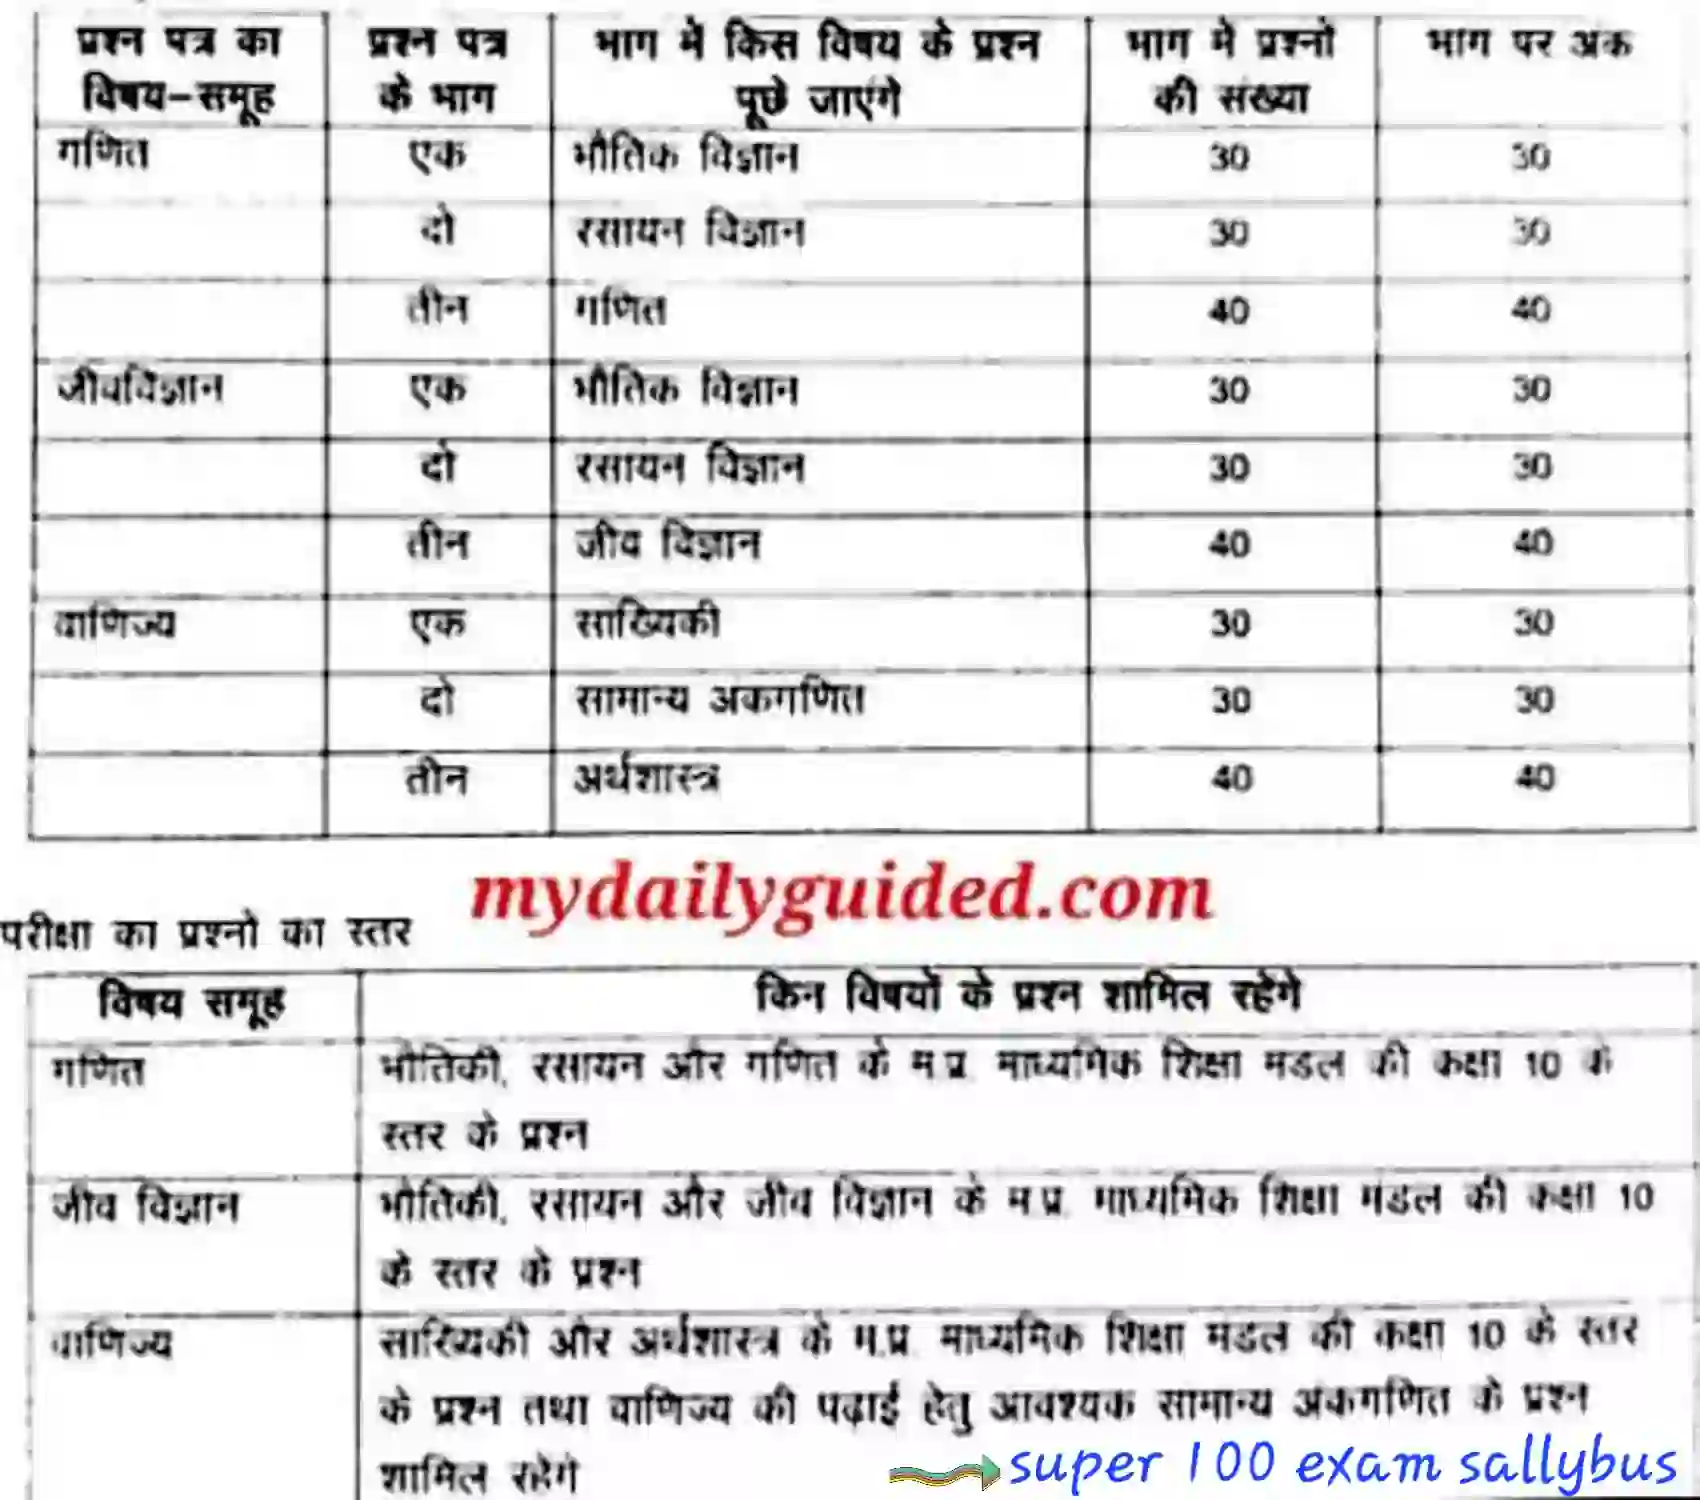 mp super 100 exam syllabus 2023 in hindi